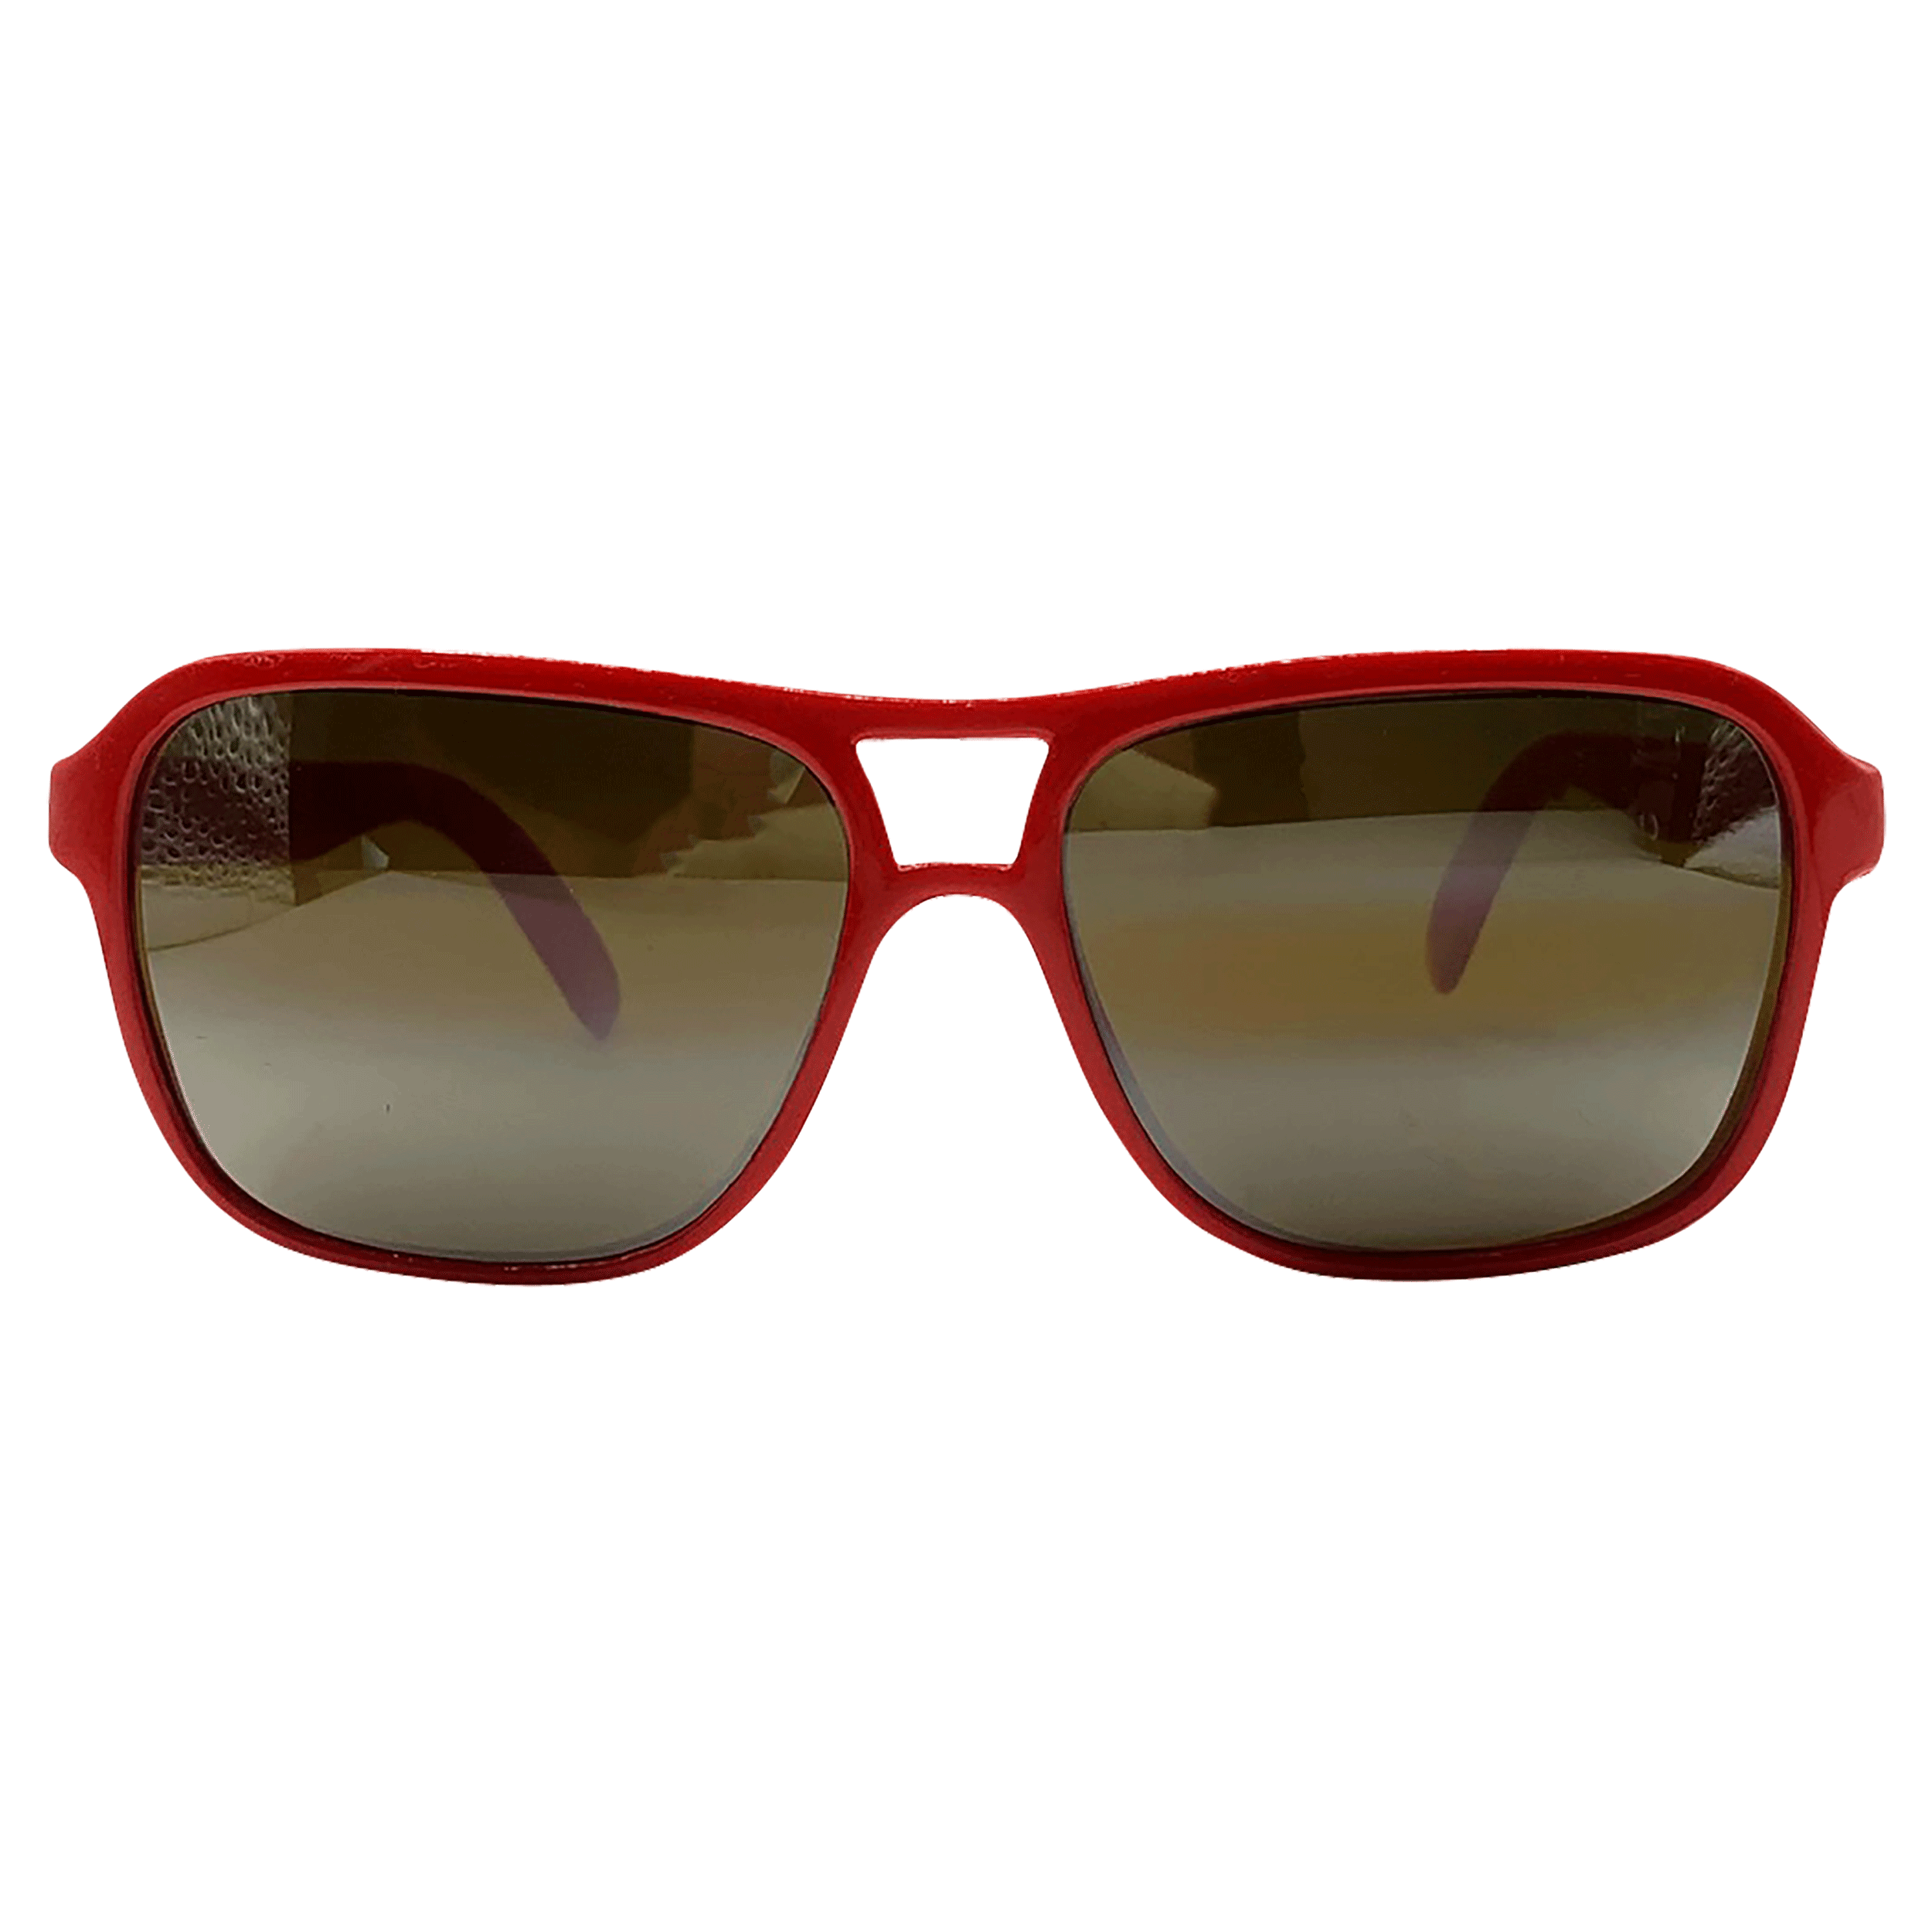 SILVIO Classic 70s Square Aviator Sunglasses